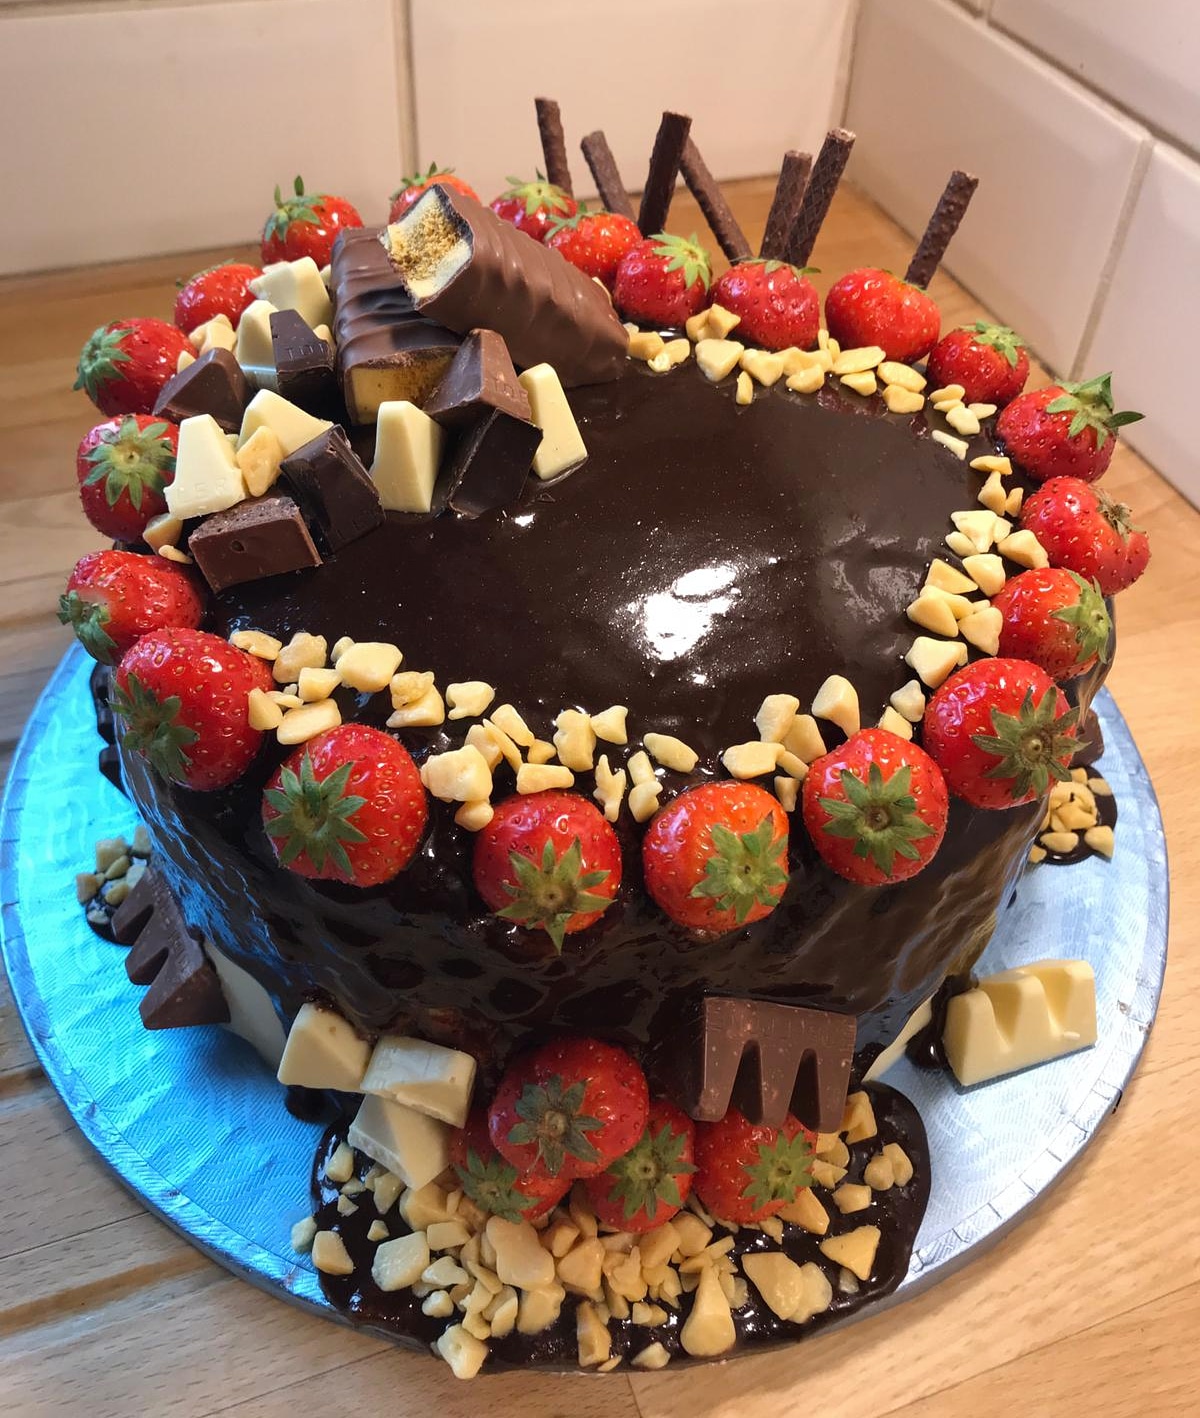 Happy birthday hubby' cake - The Great British Bake Off | The ...